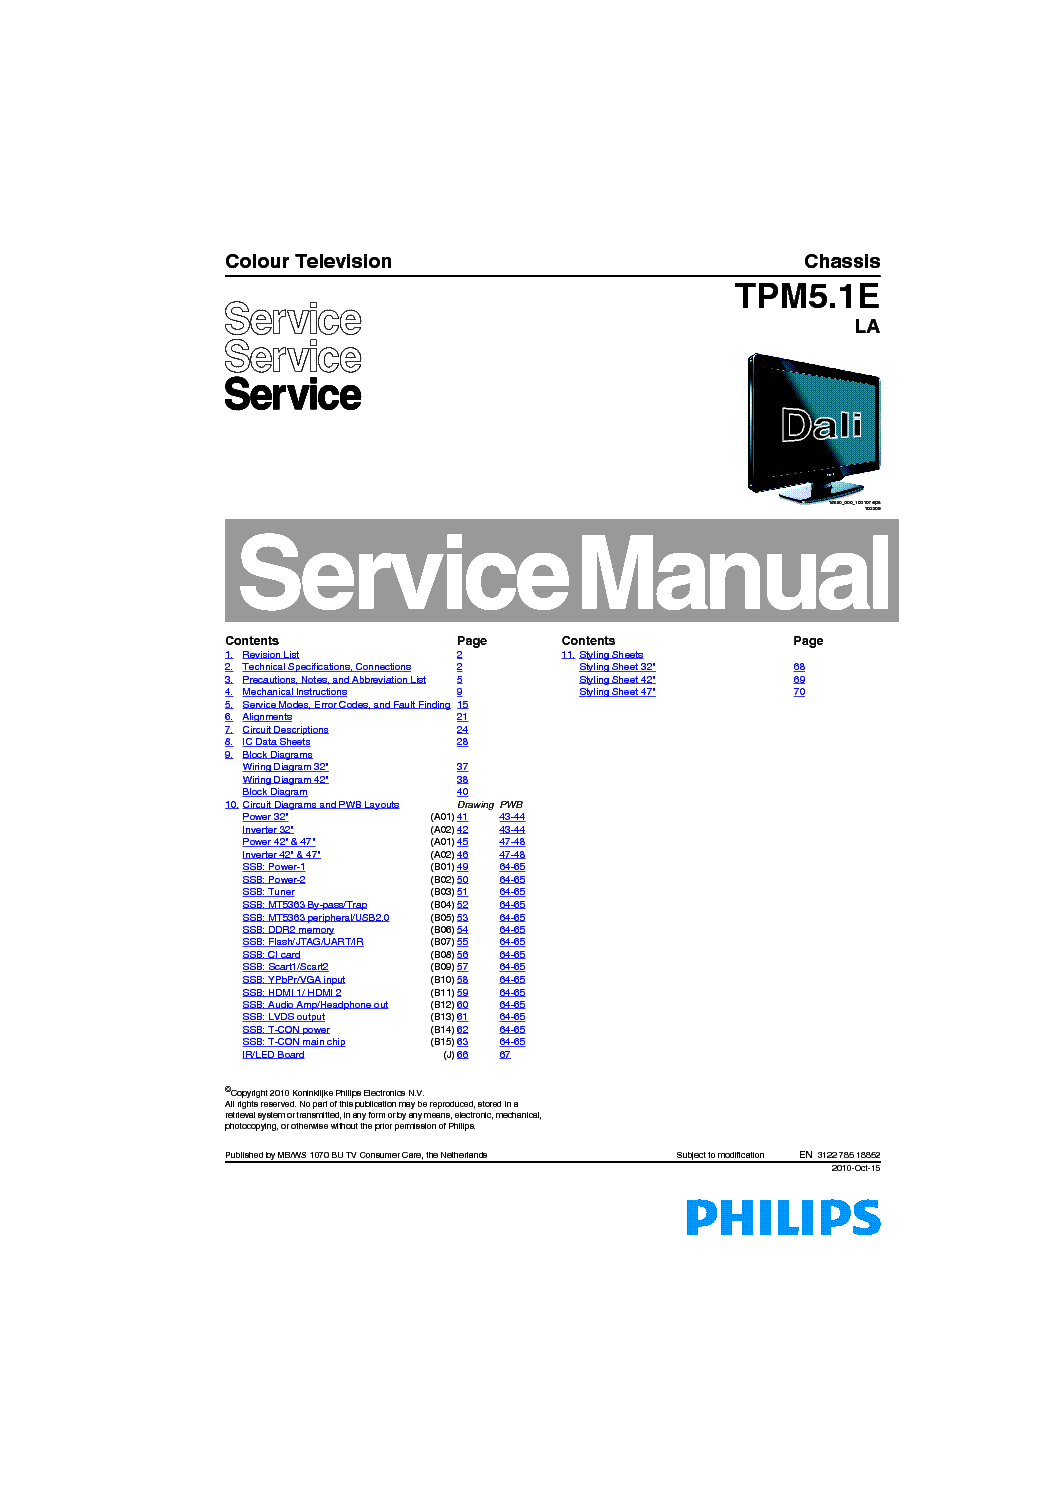 PHILIPS CHASSIS TPM5.1E-LA service manual (1st page)